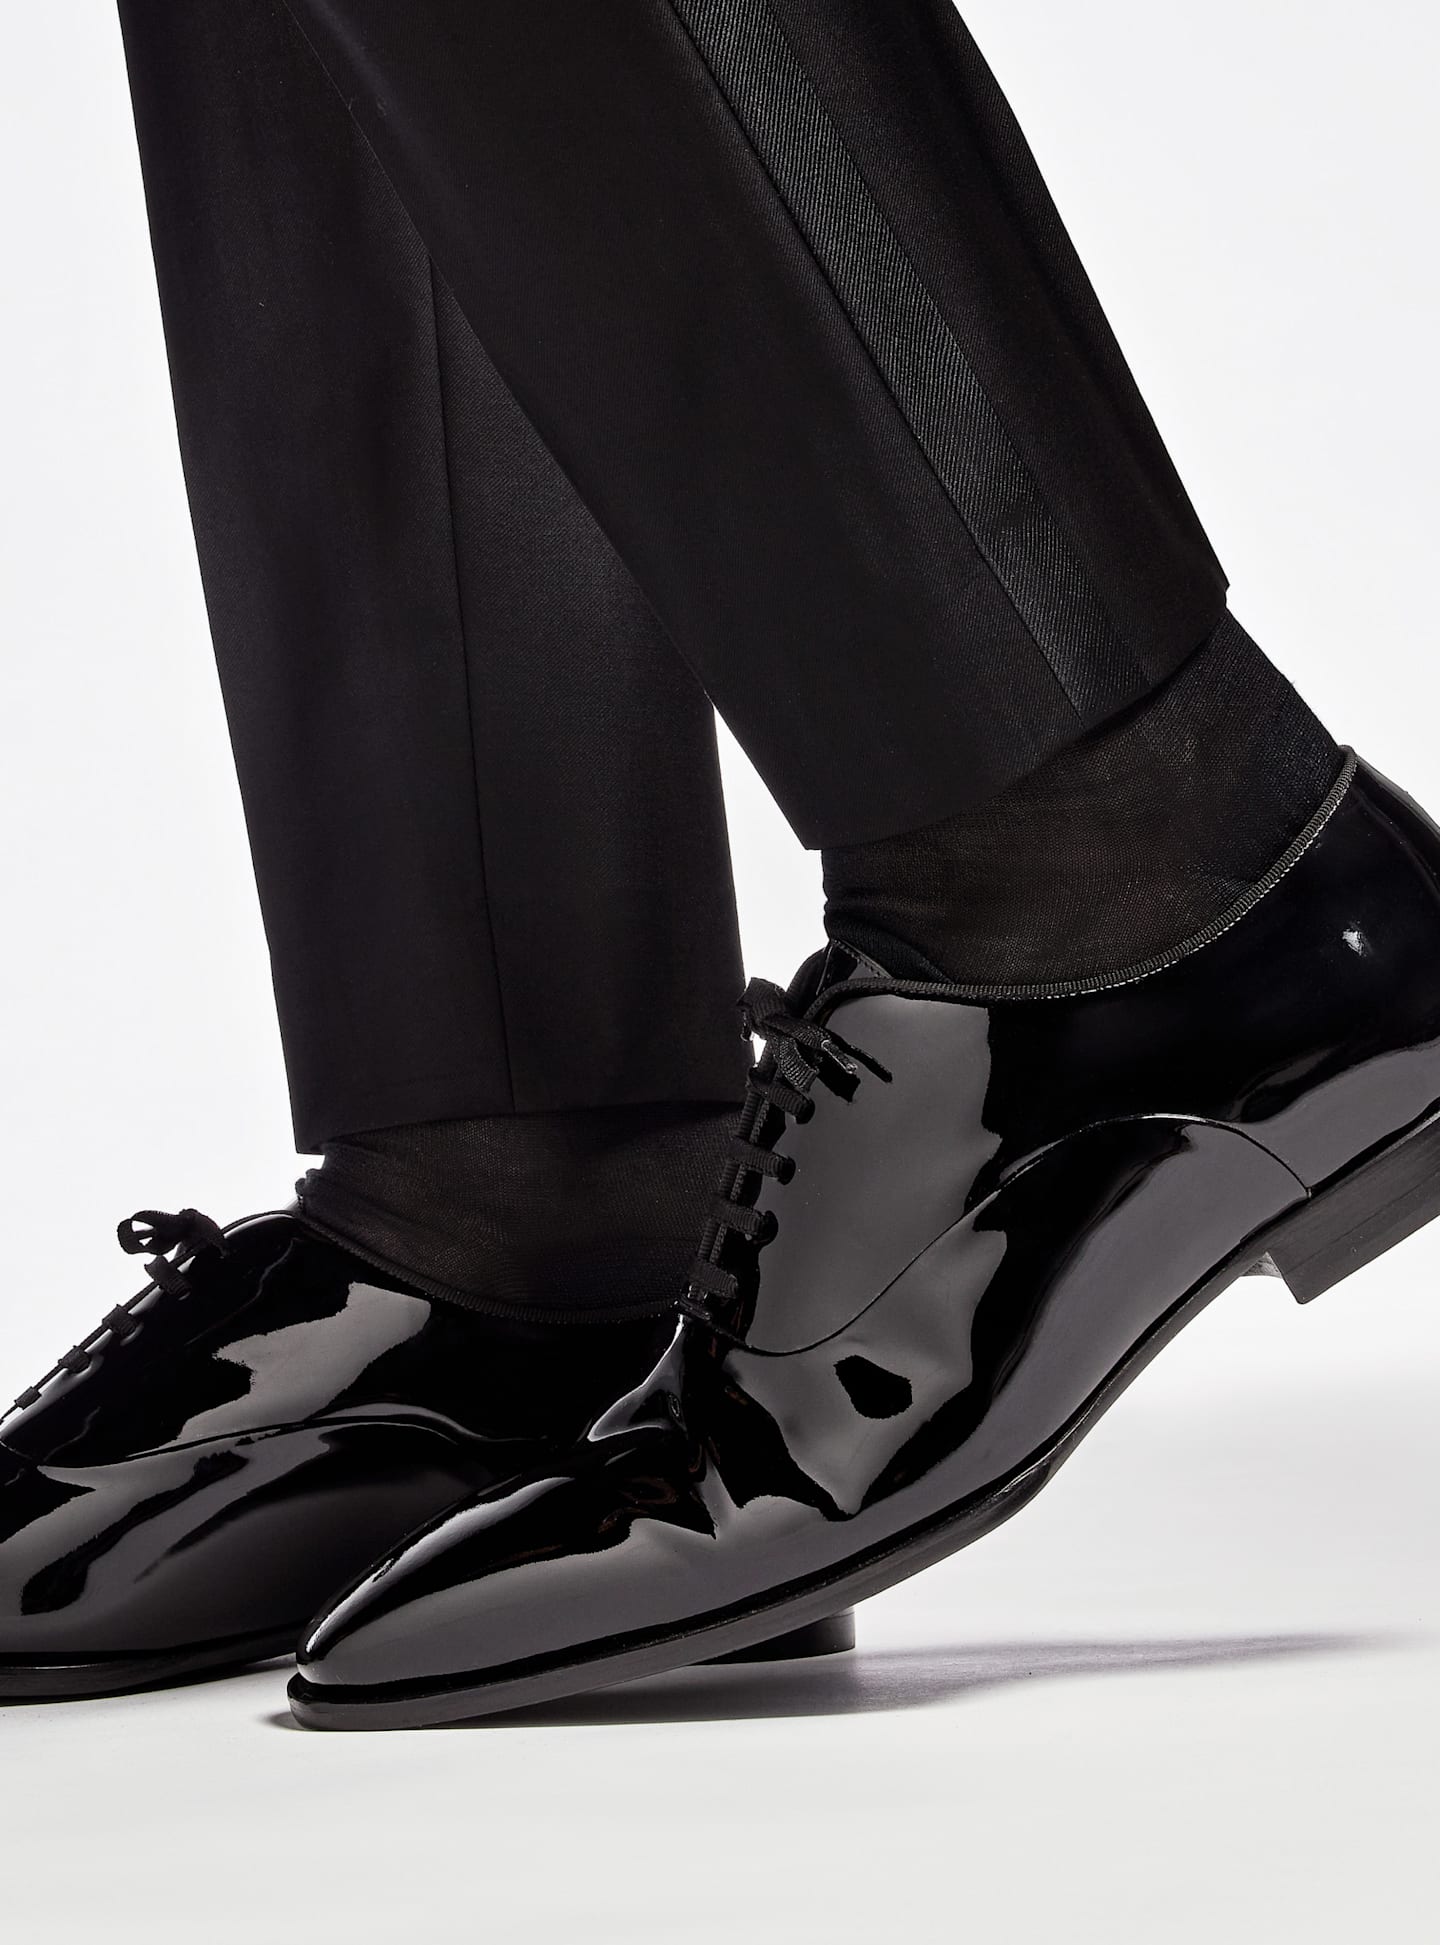 Detail shot of black patent leather tuxedo shoes.